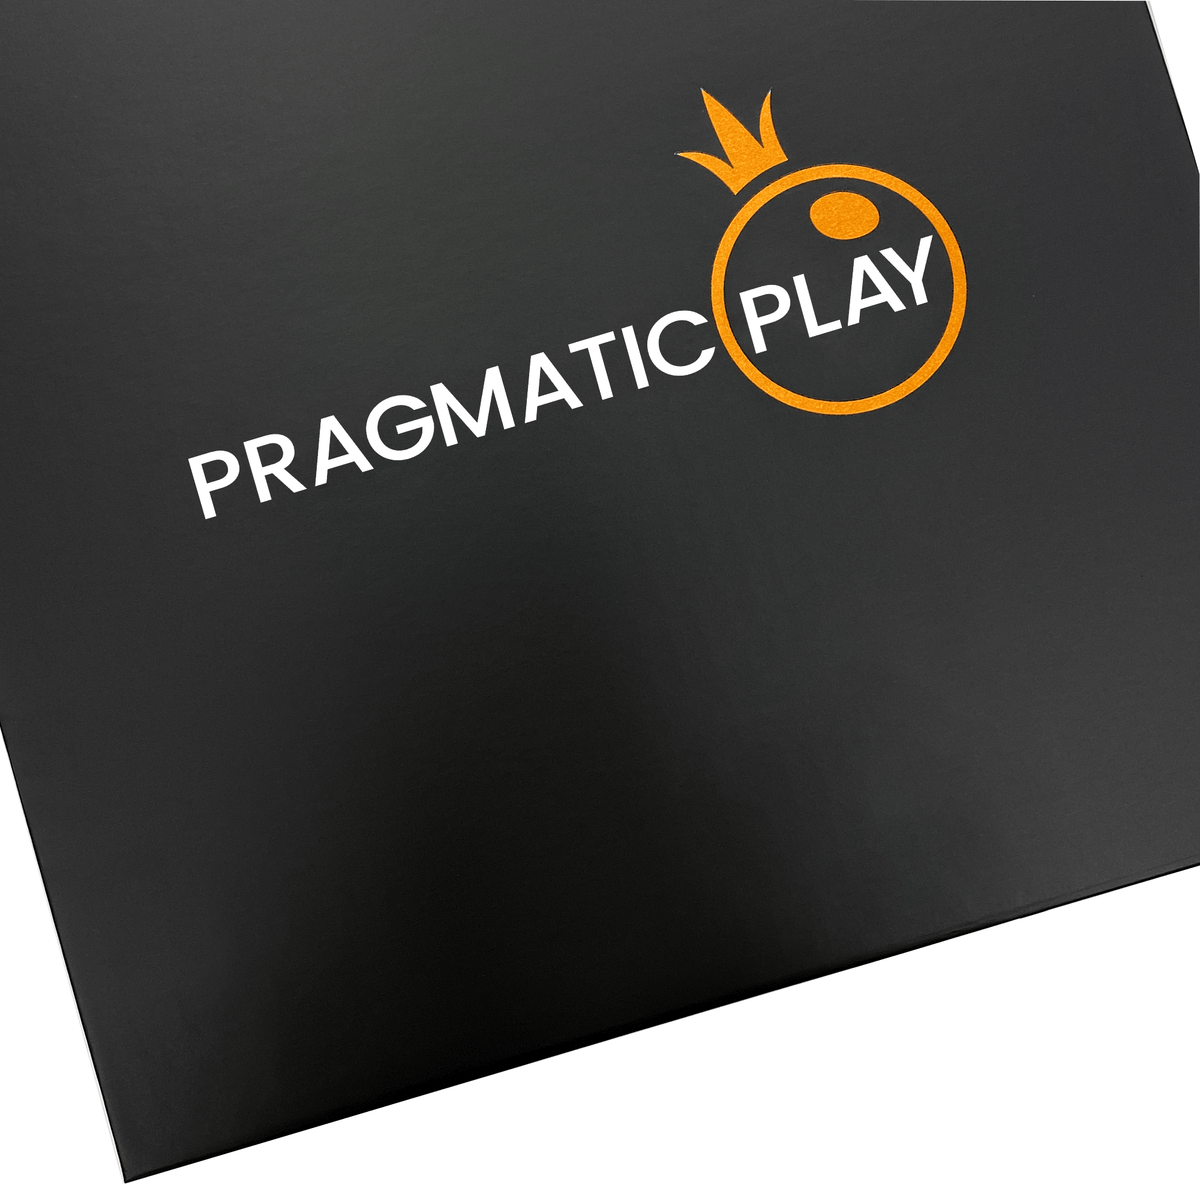 Sample  - Black Large Square Magnetic Gift Box